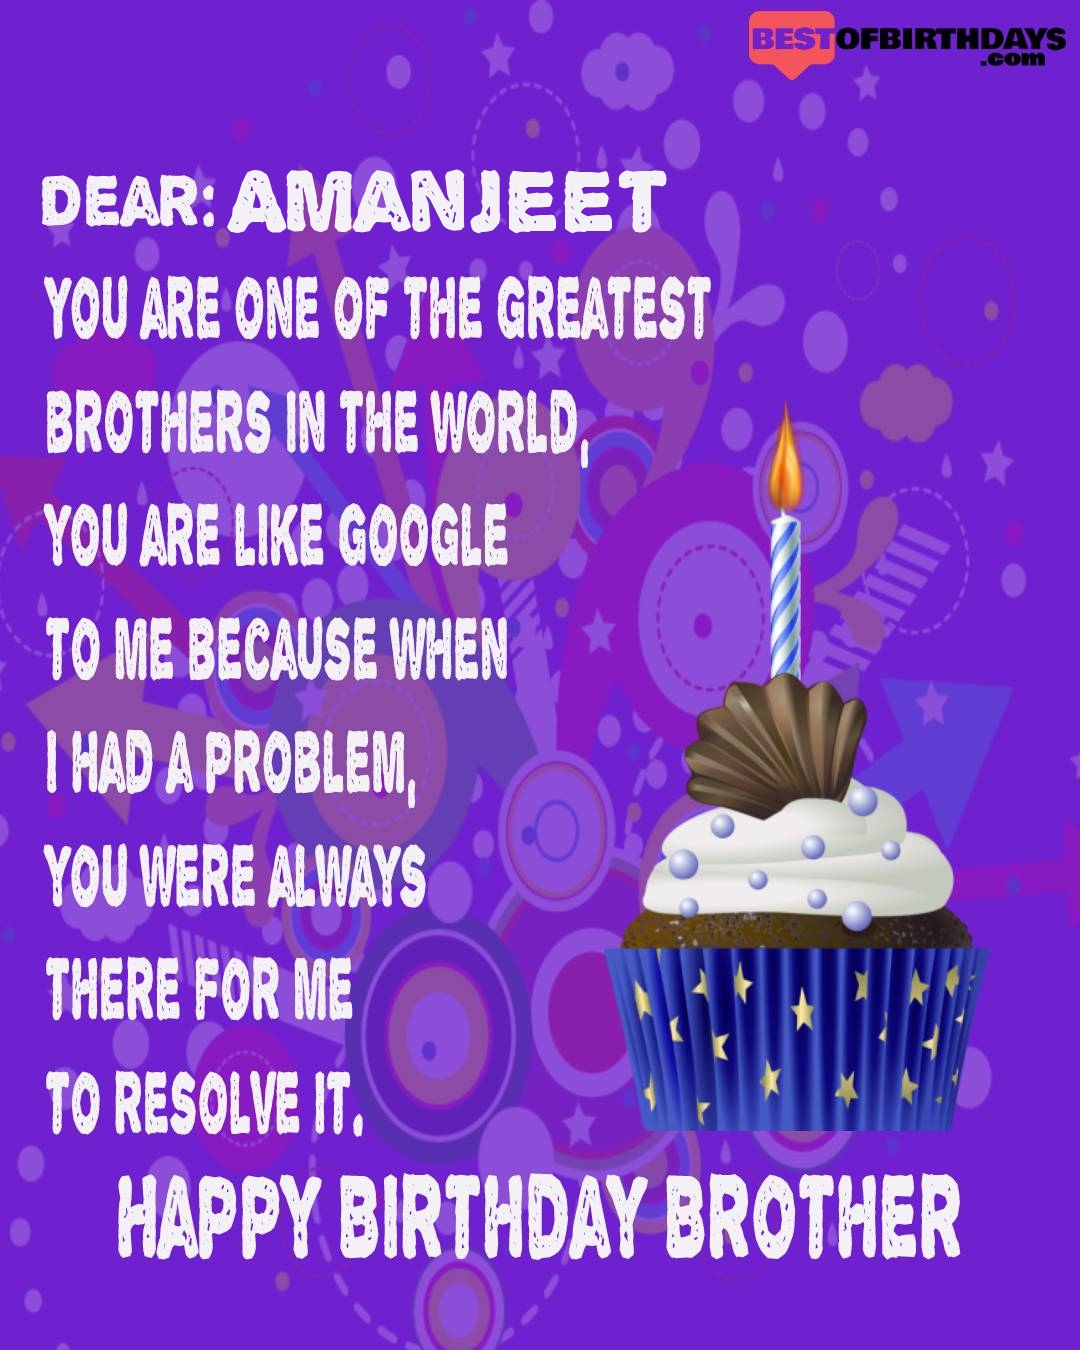 Happy birthday amanjeet bhai brother bro